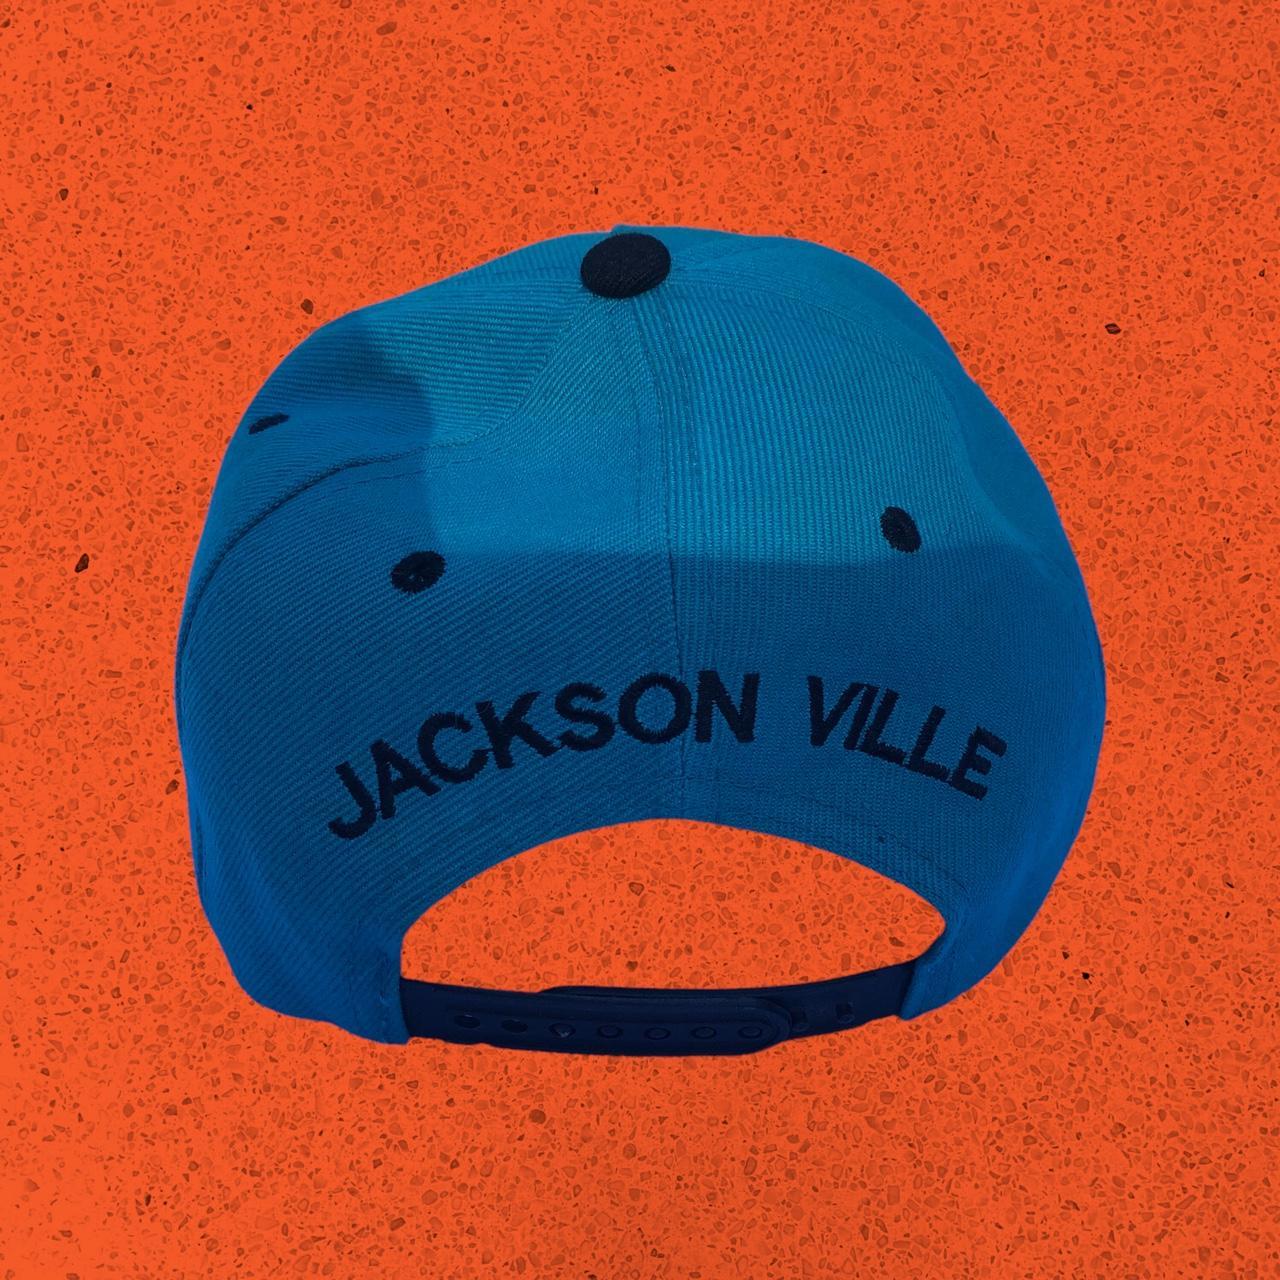 Product Image 3 - Teal blue #Jacksonville Florida hat